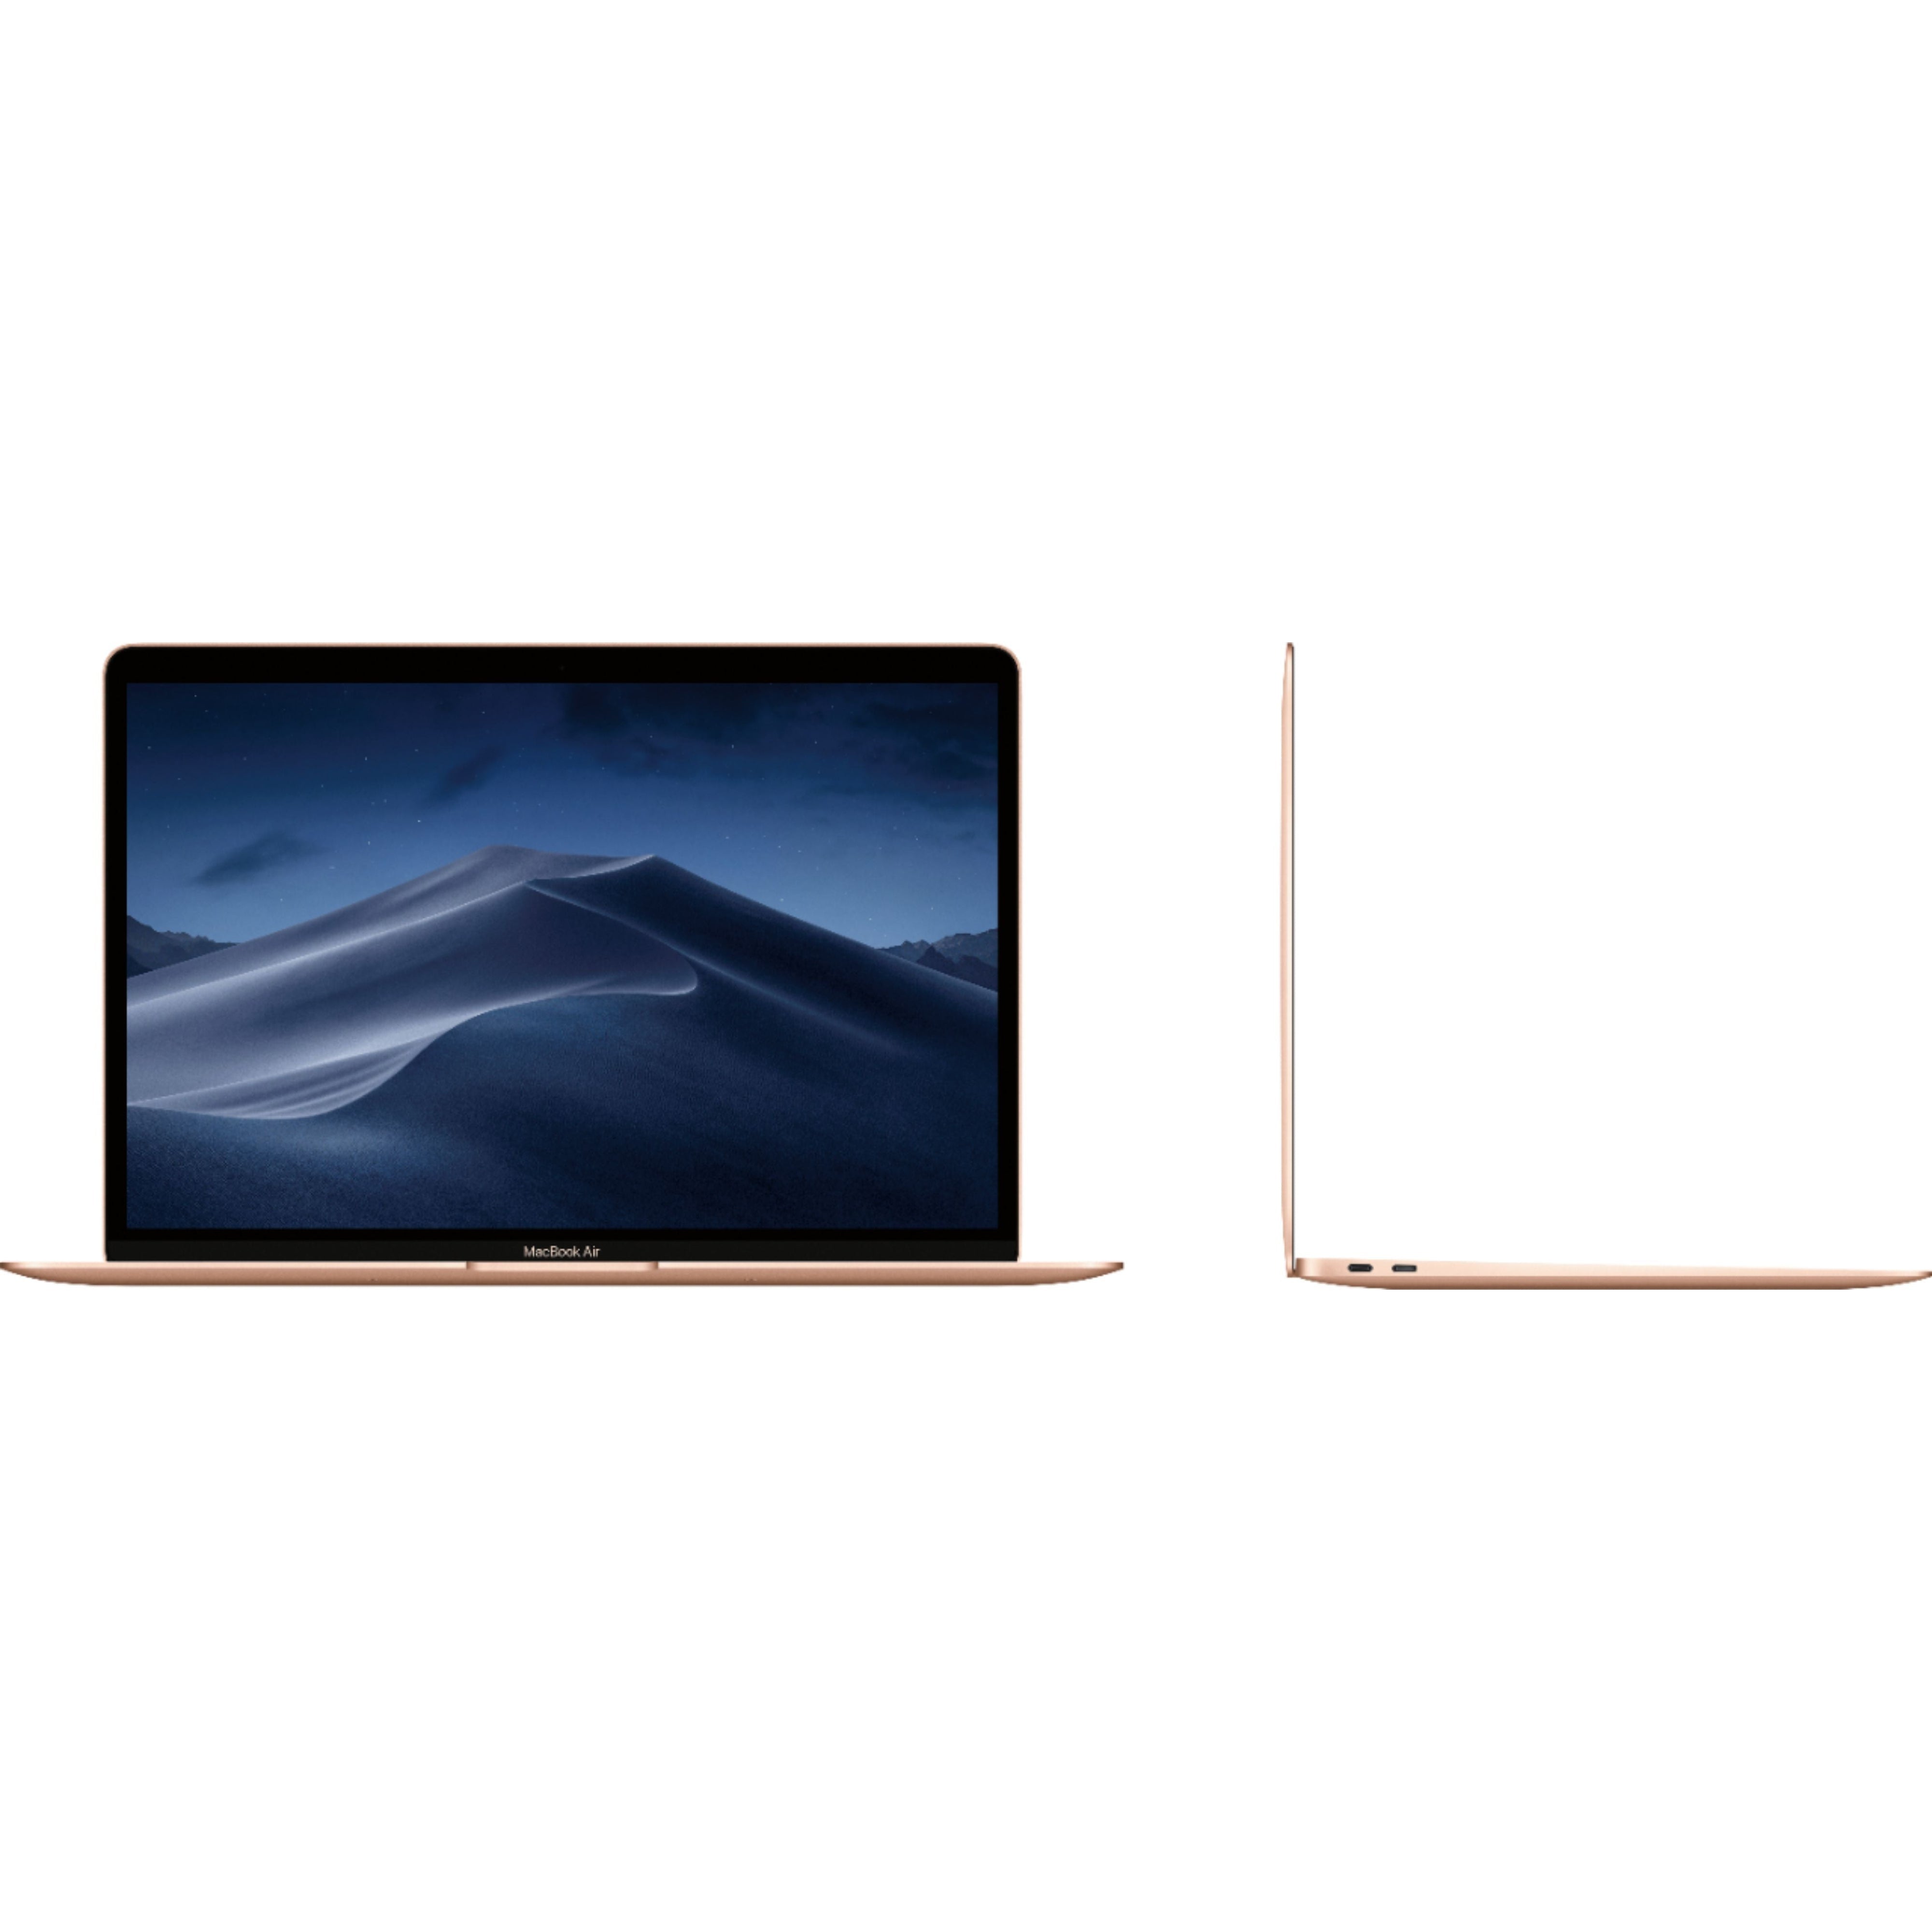 Apple Macbook Air 13.3'' MVFM2LL/A (2019) Laptop, Intel Core i5, 8GB RAM, 128GB, Gold